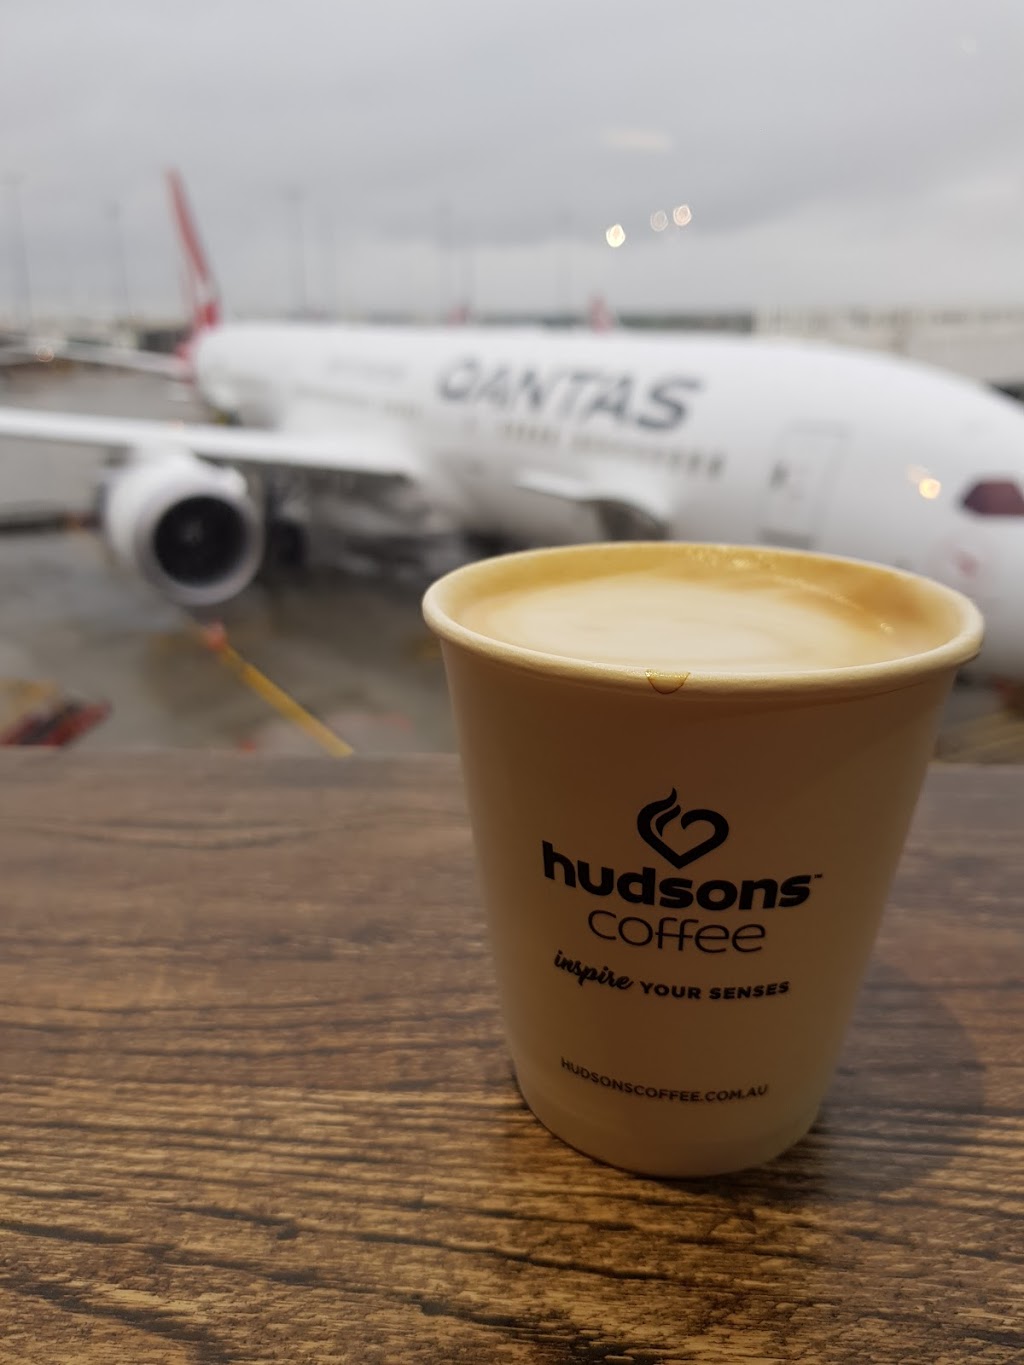 Hudsons Coffee T2 | T2 International Departures, Melbourne Airport VIC 3045, Australia | Phone: (03) 9338 2385